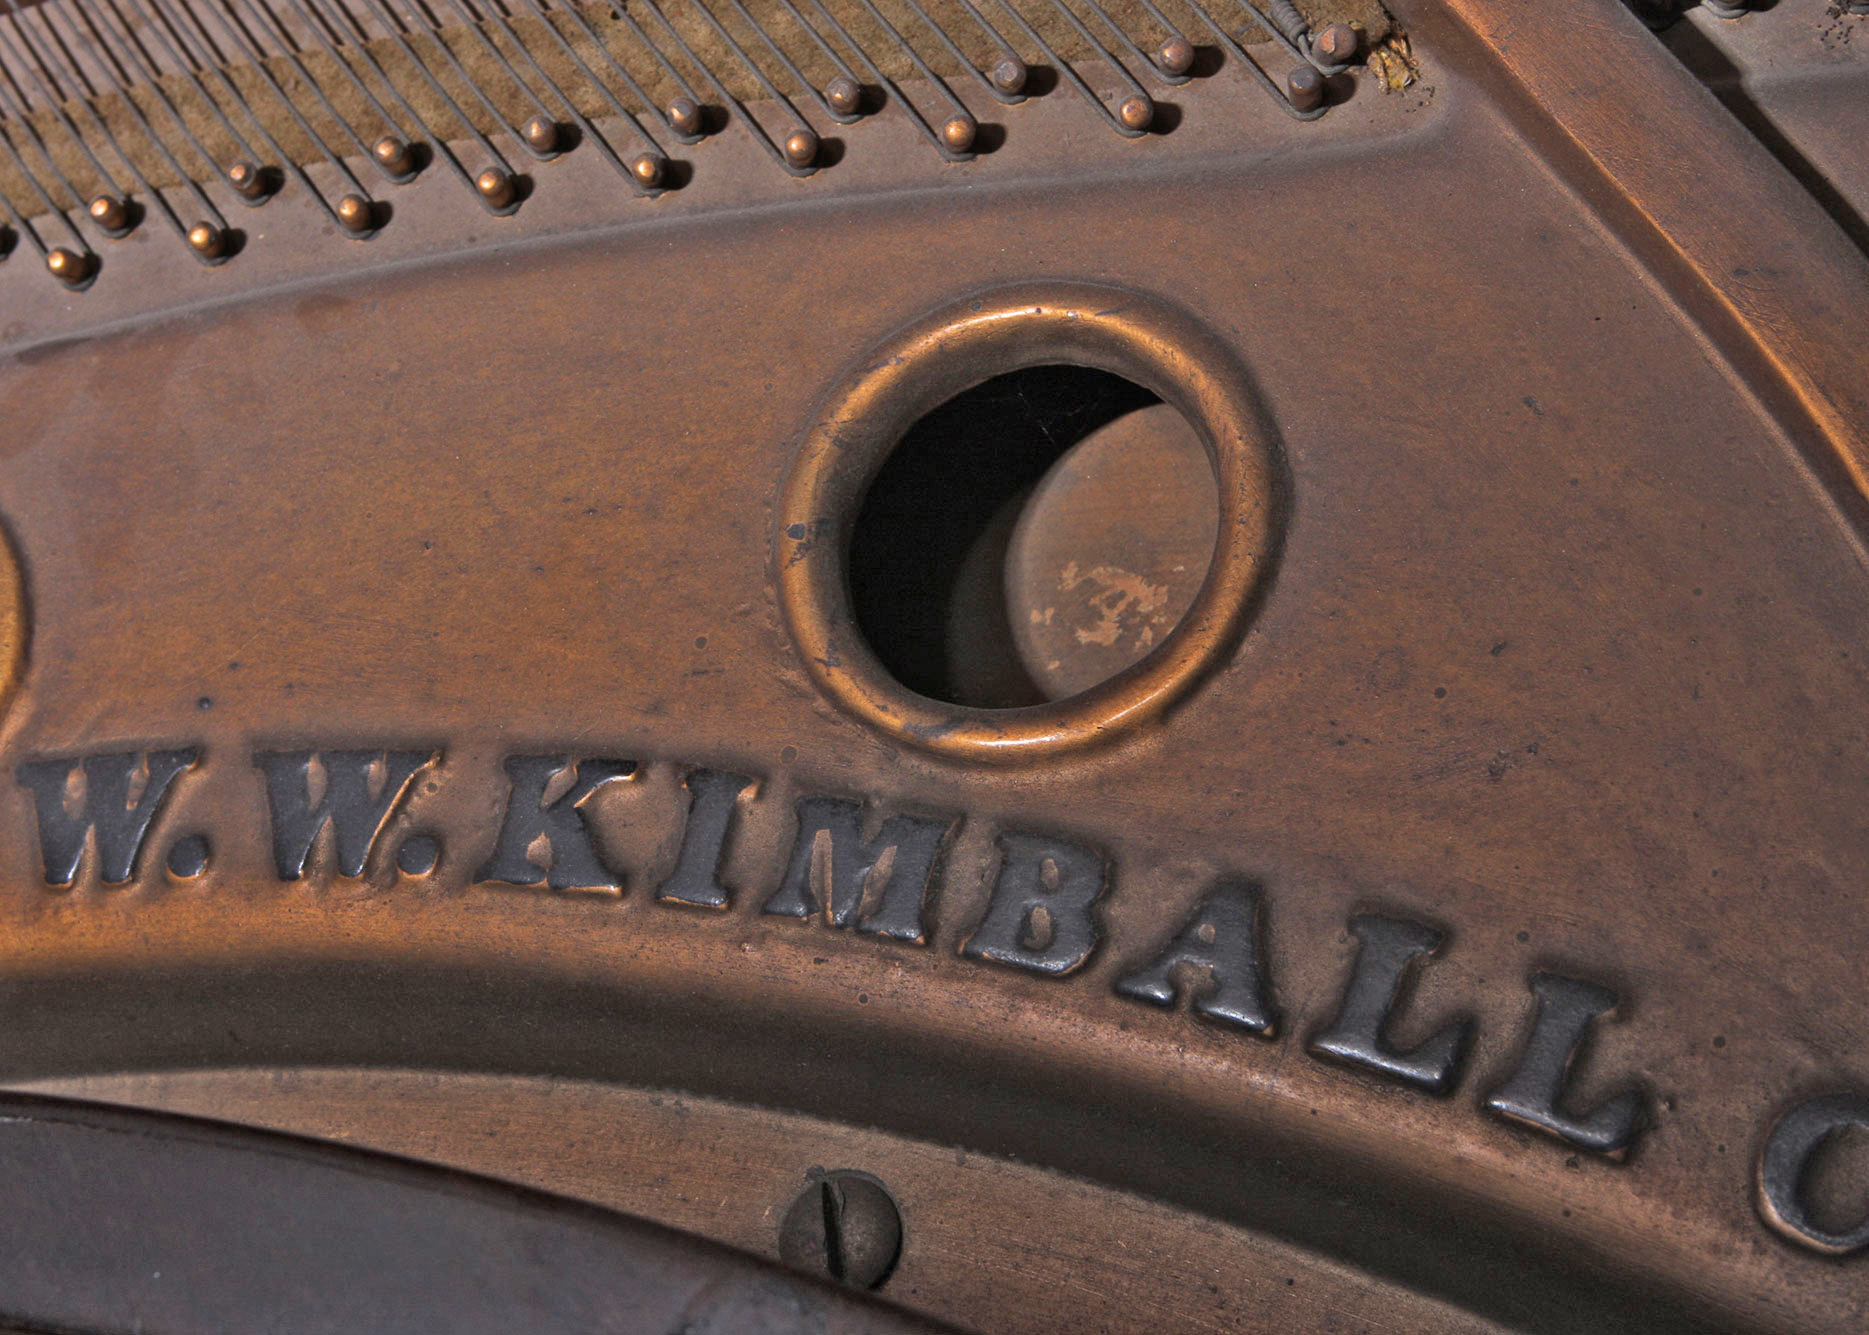 1931 kimball baby grand piano catalog